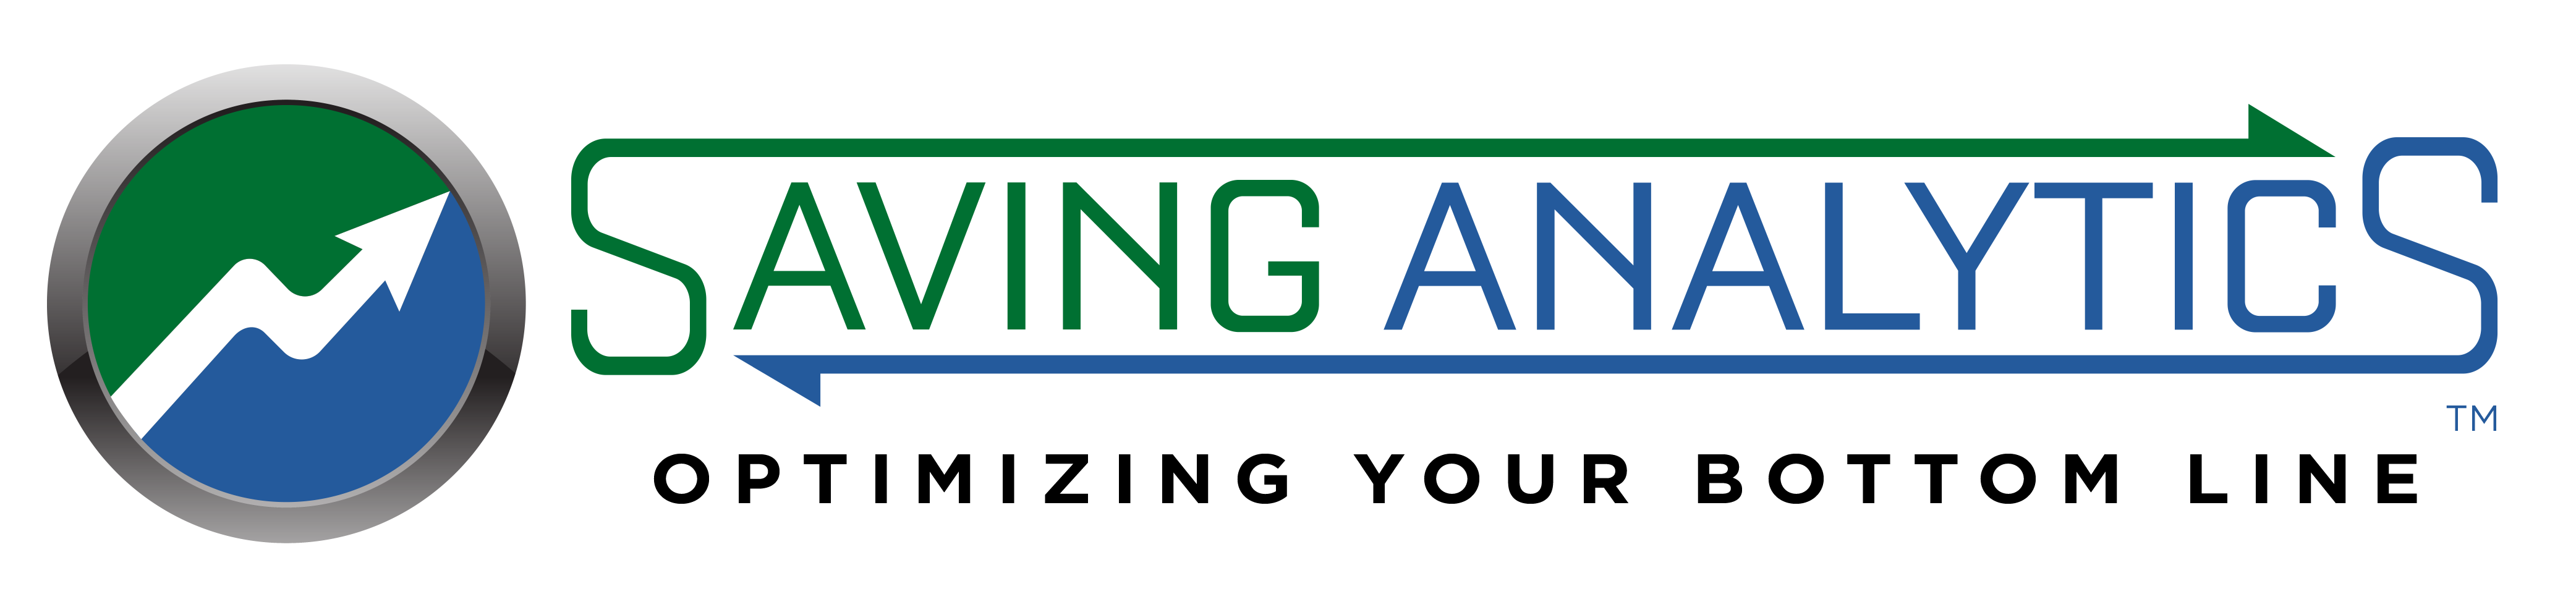 Saving Analytics logo, click to go to site.